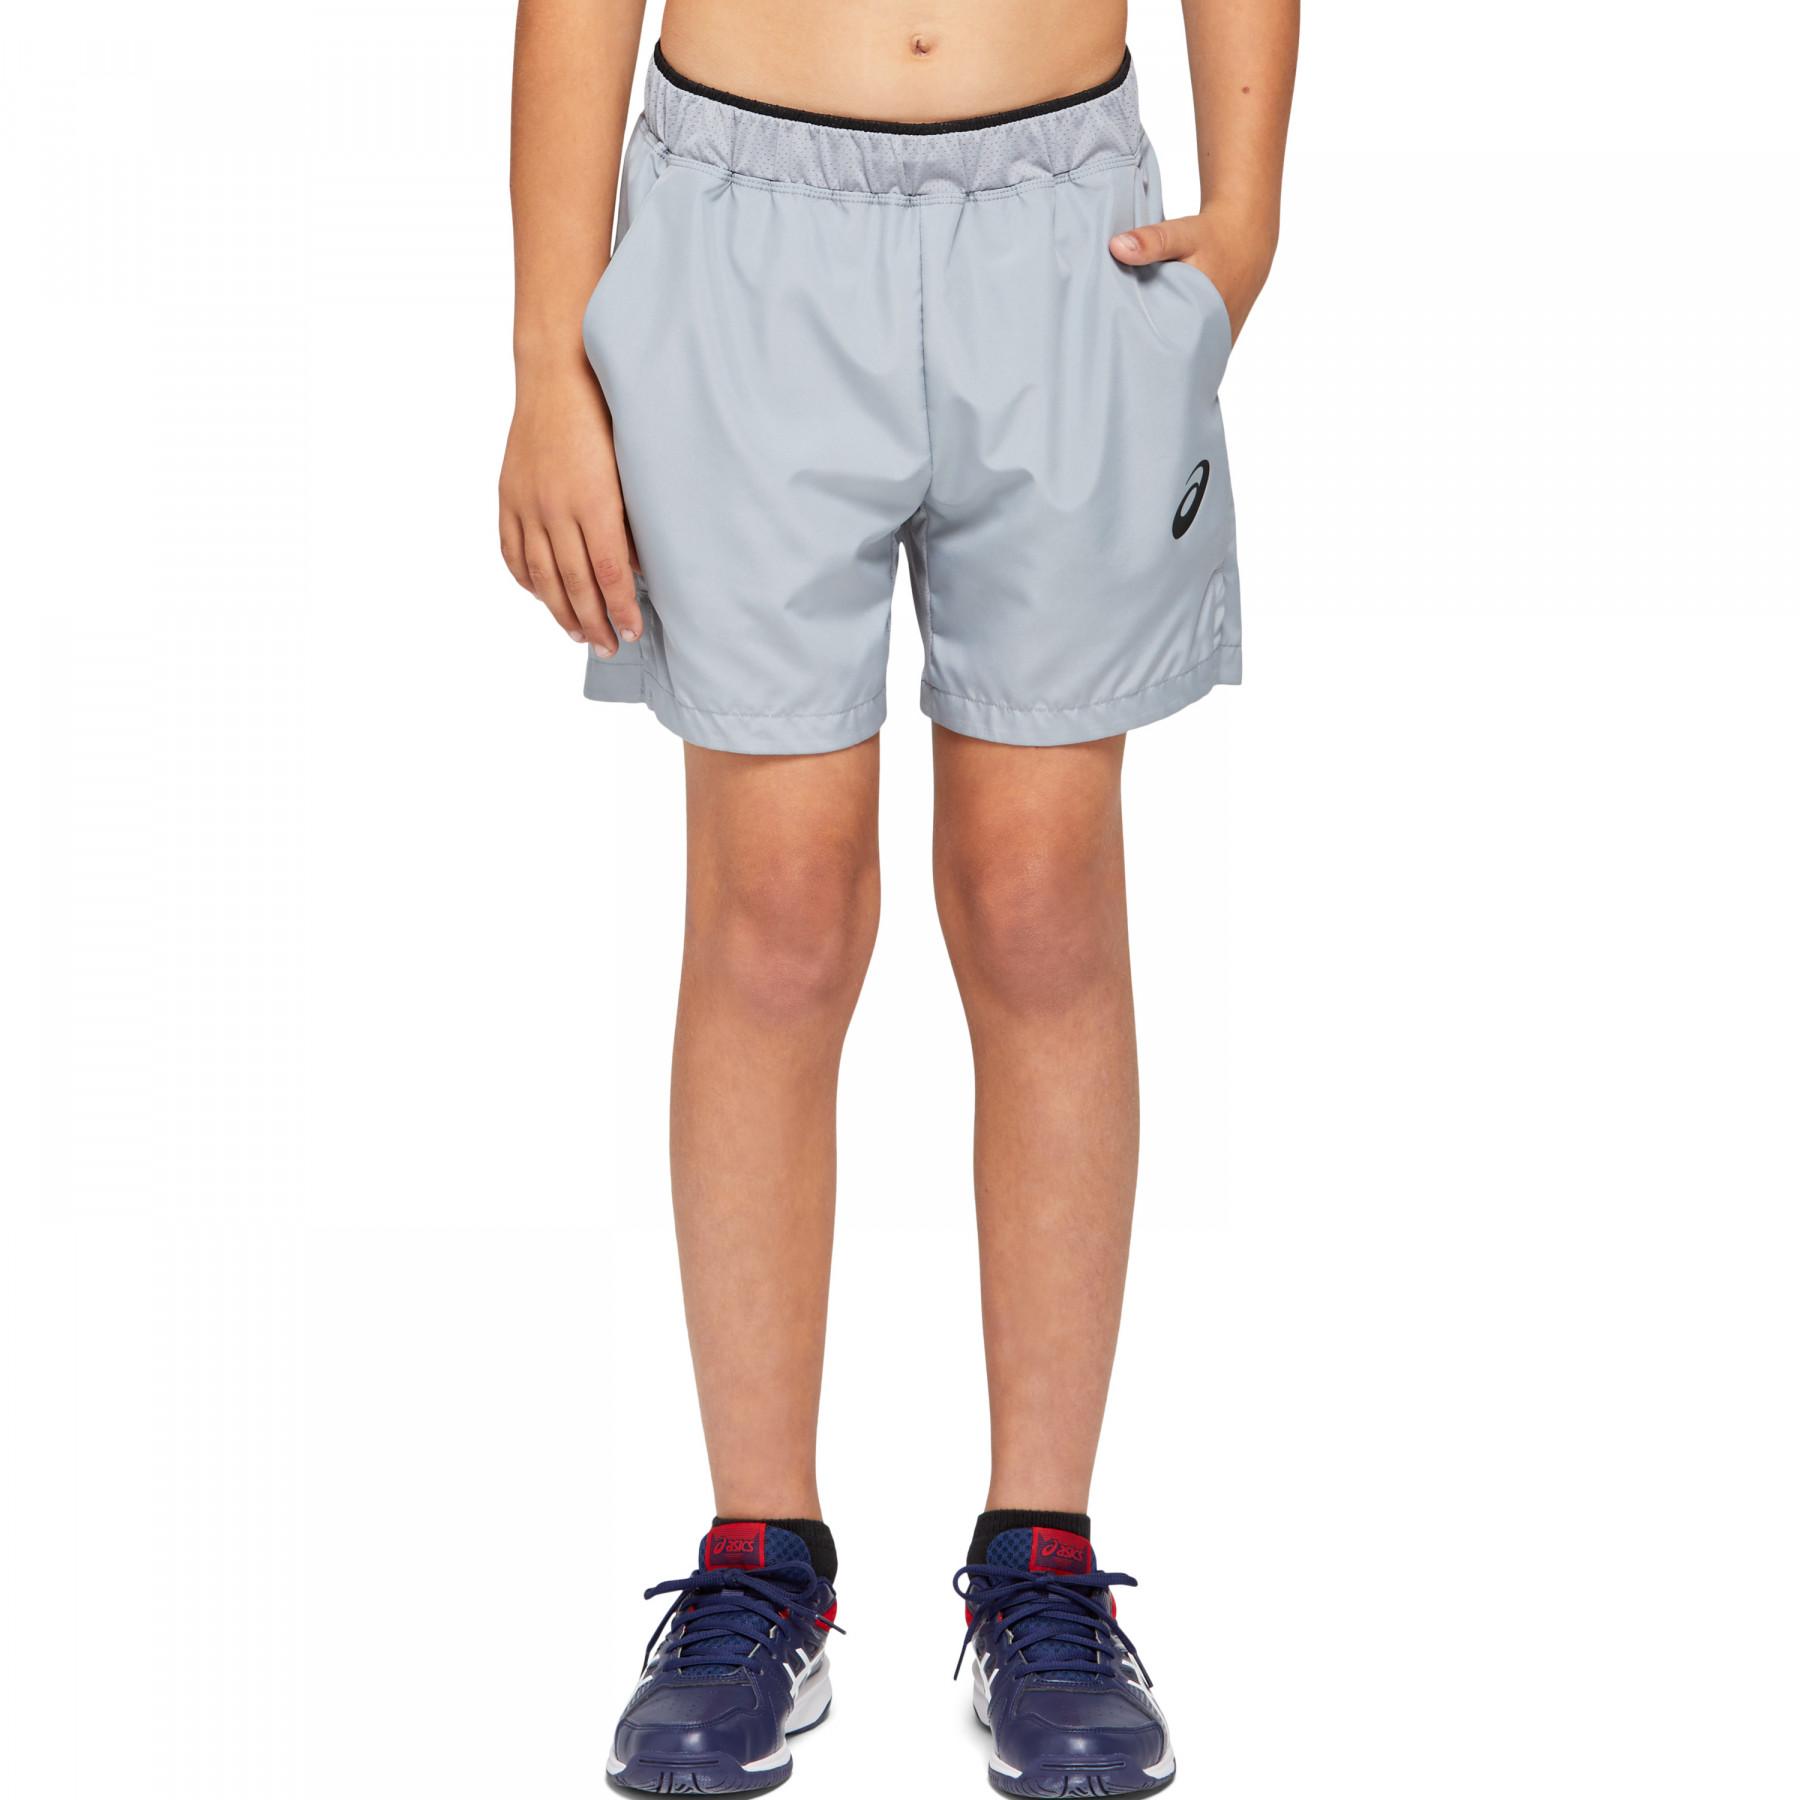 Kinder shorts Asics Tennis